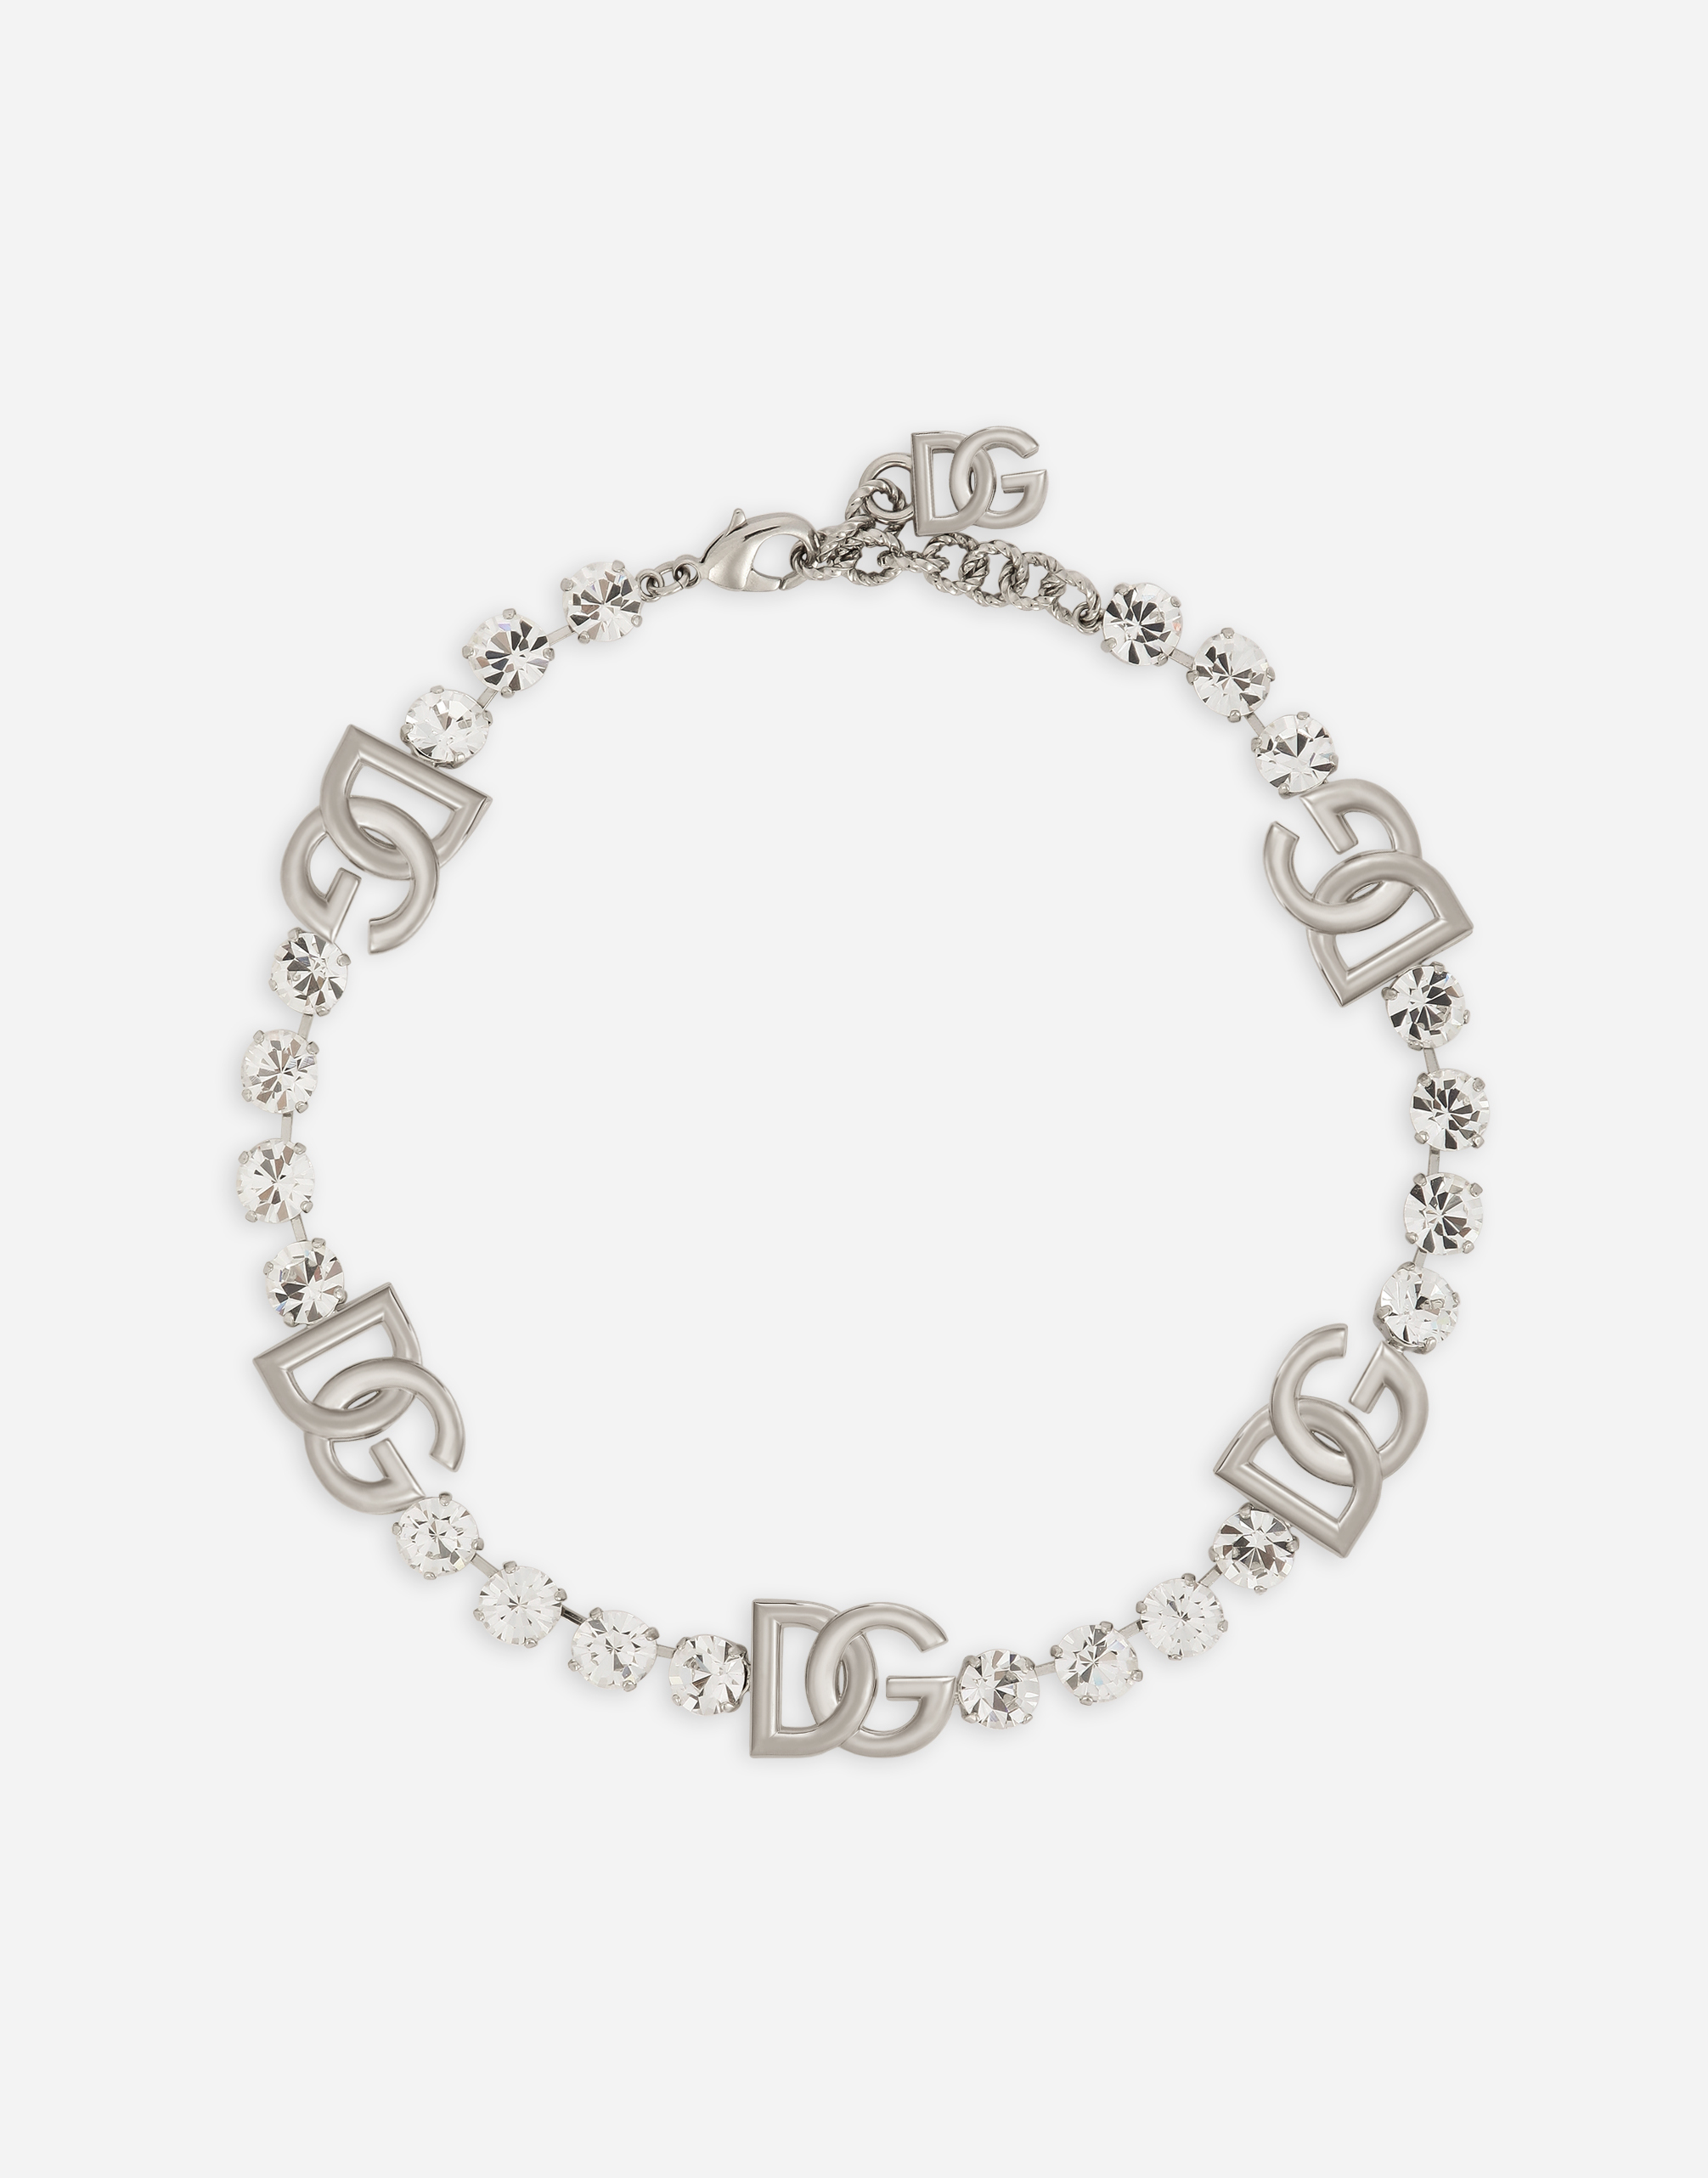 KIM DOLCE&GABBANA Rhinestone necklace with DG logo in Silver